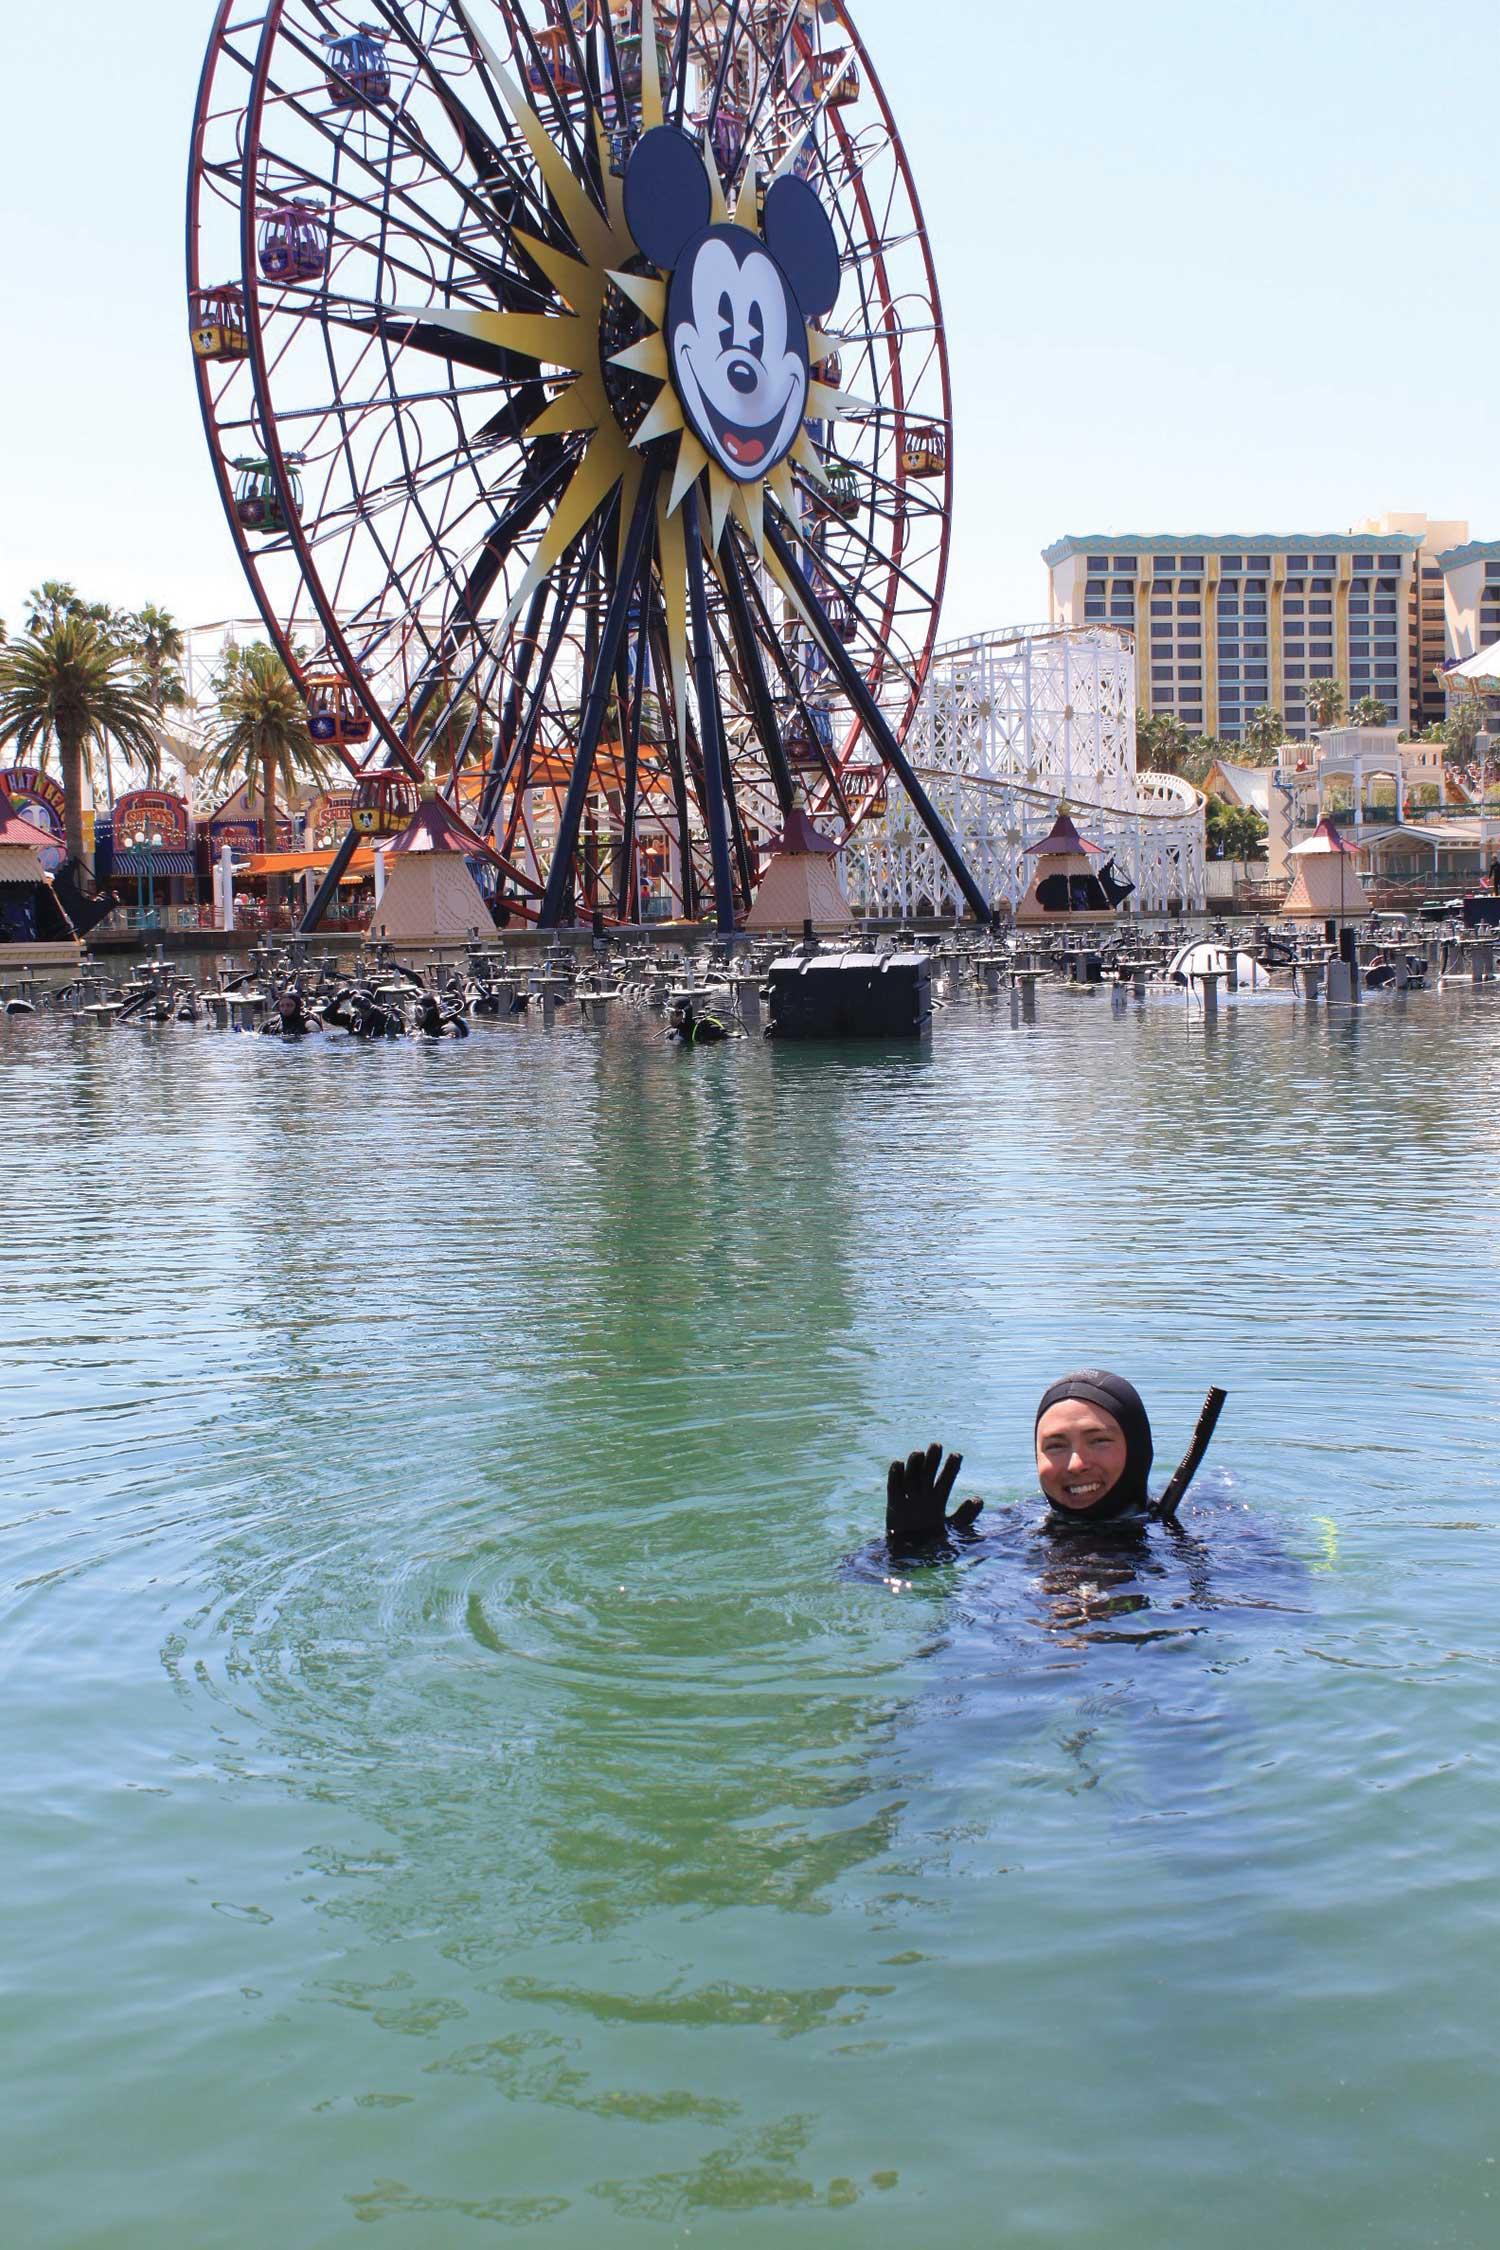 Mike Morrison in scuba gear in lake at Disneyland